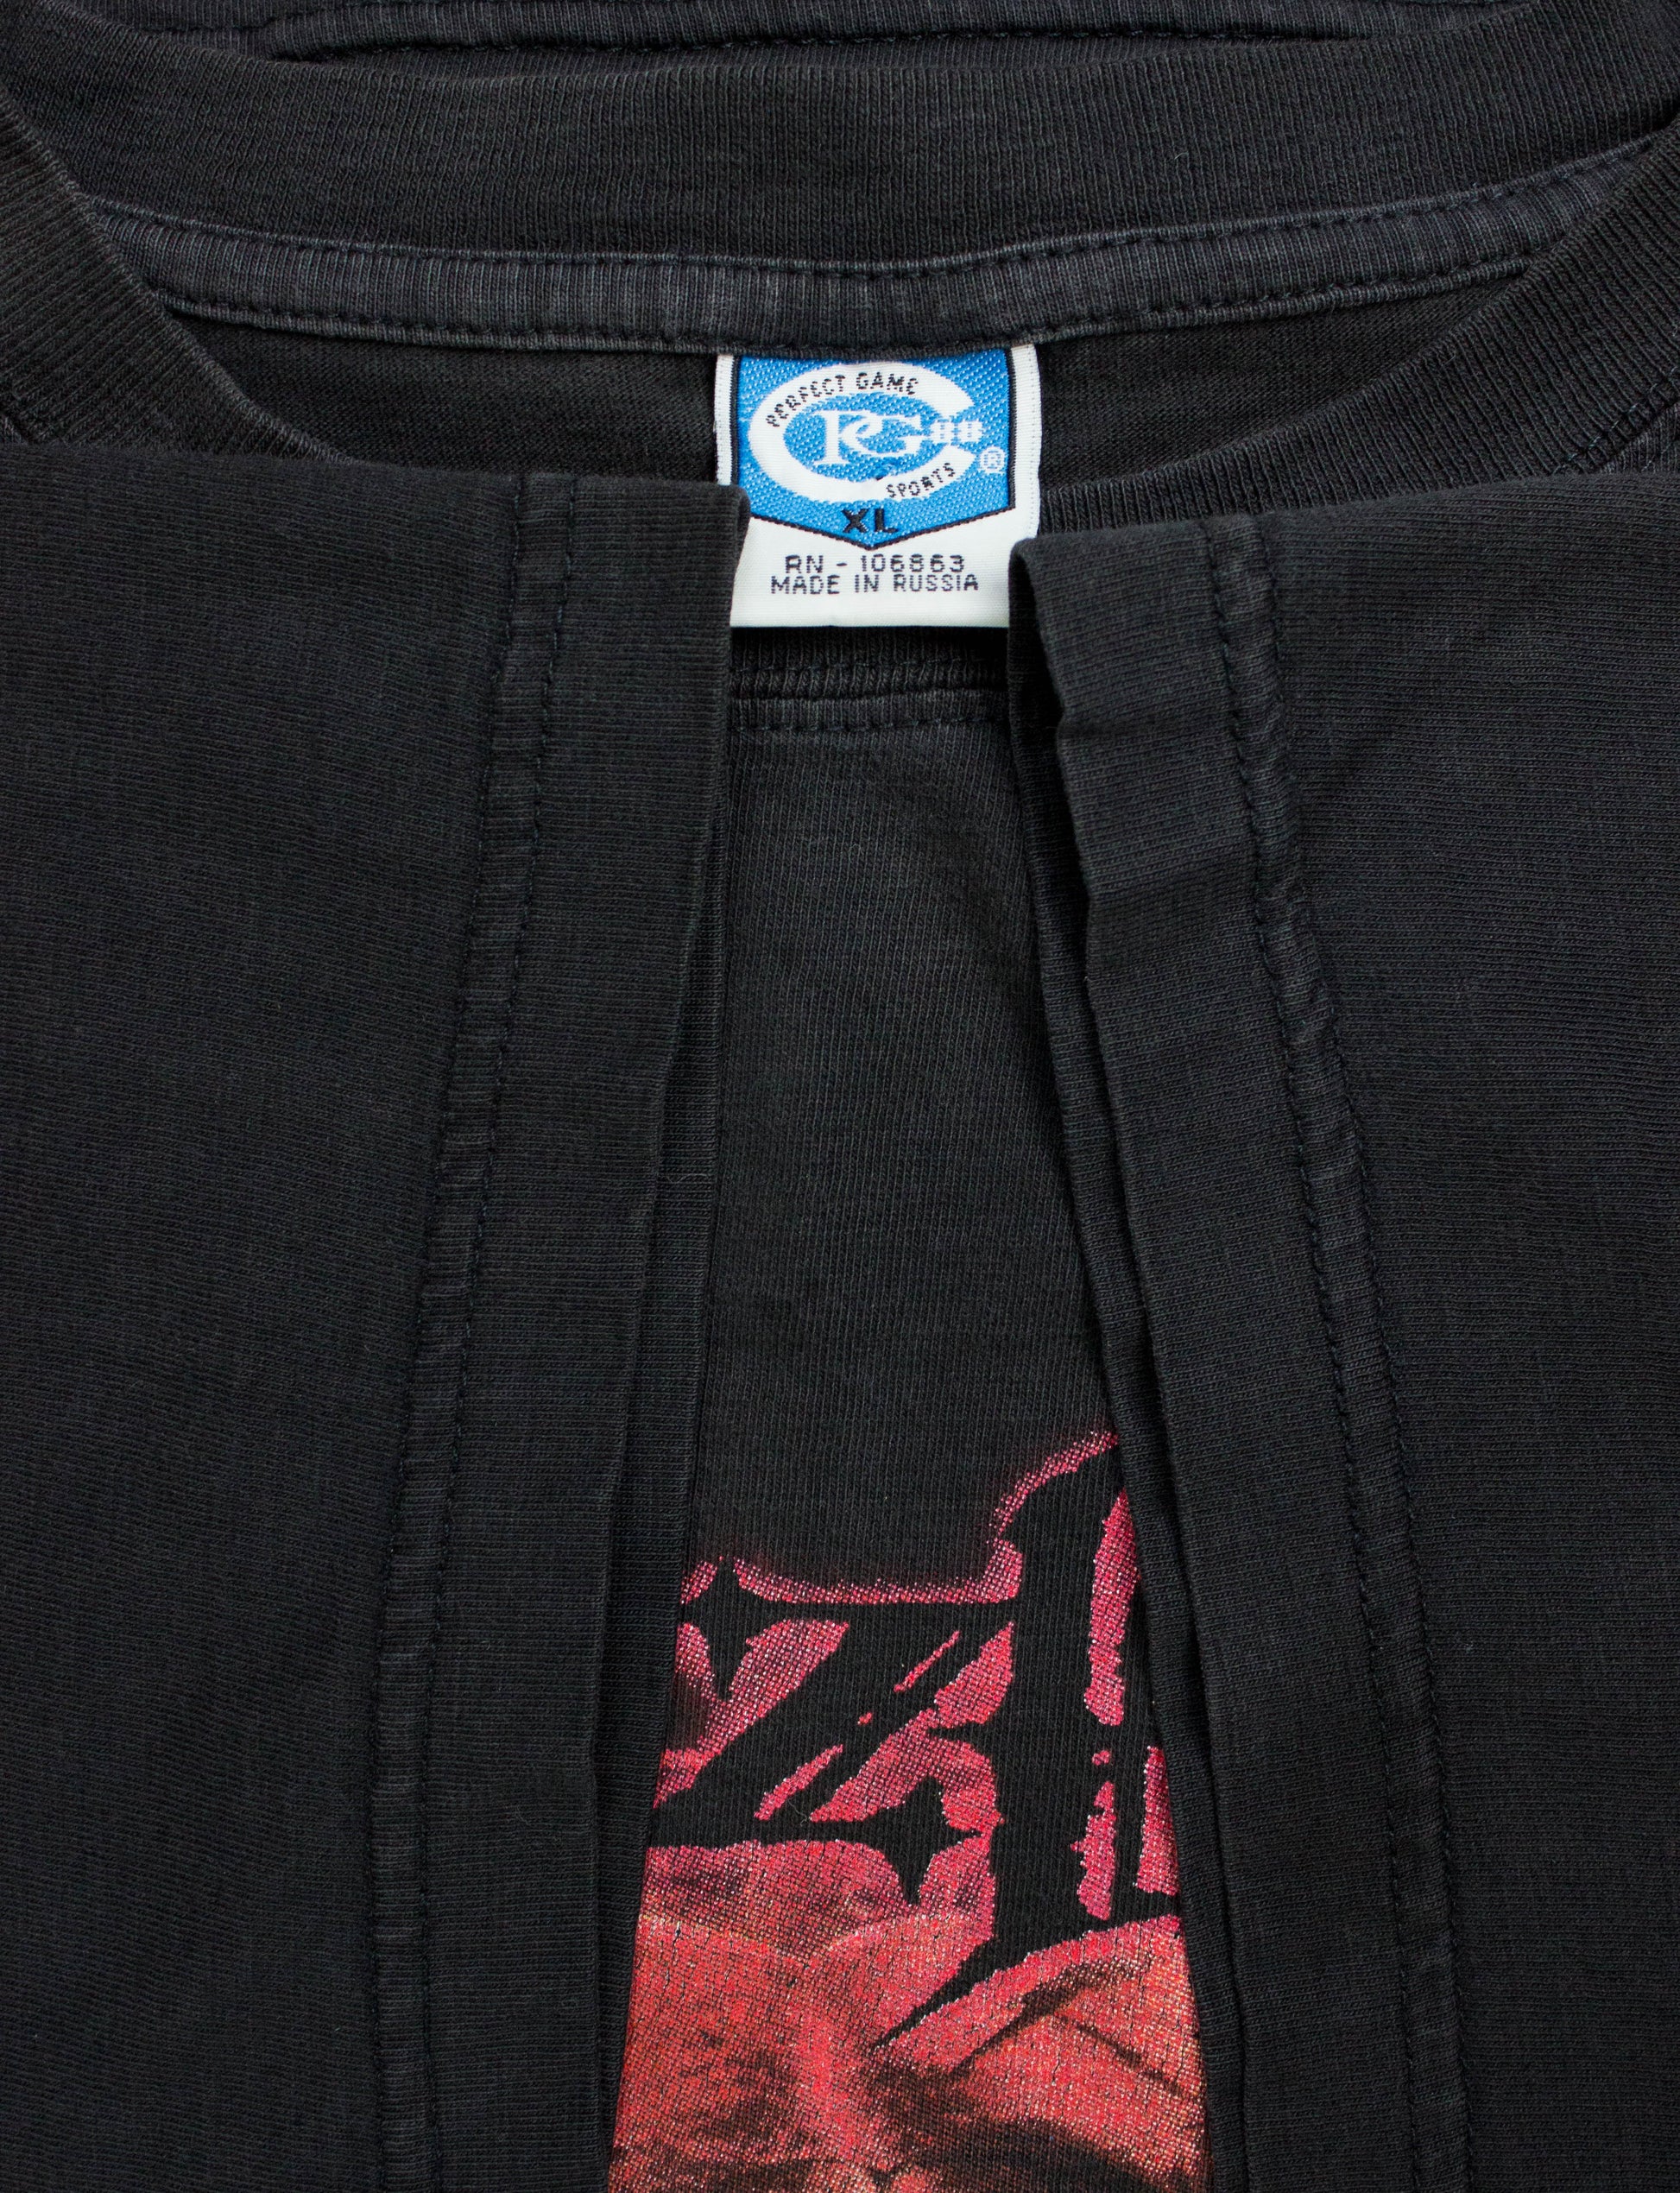 Ozzy Osbourne Ozzfest 2002 System of a Down Rob Zombie Black Concert T Shirt Unisex XL